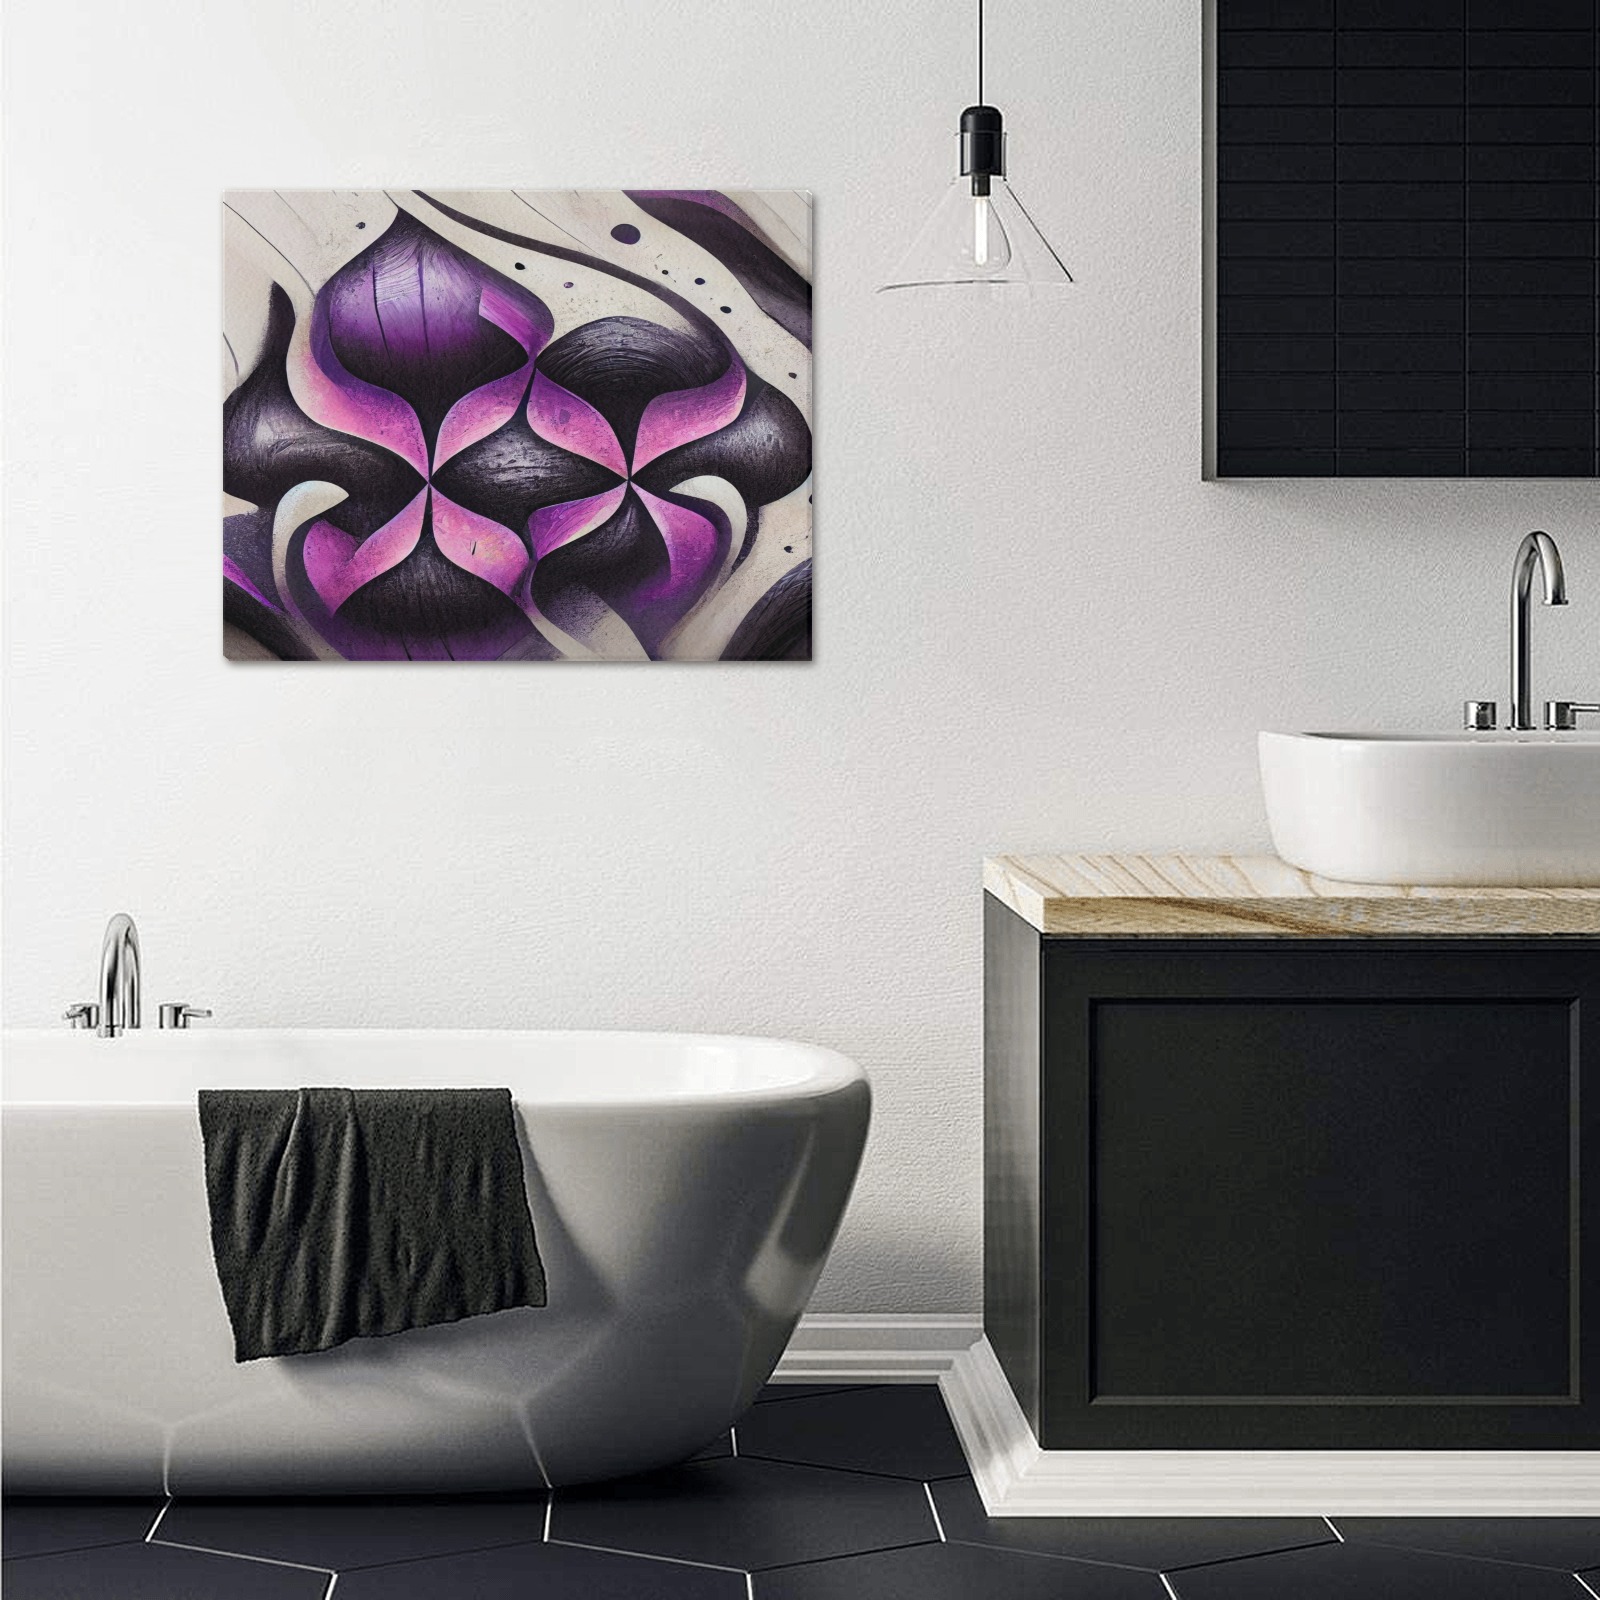 purple and cream pattern Frame Canvas Print 20"x16"